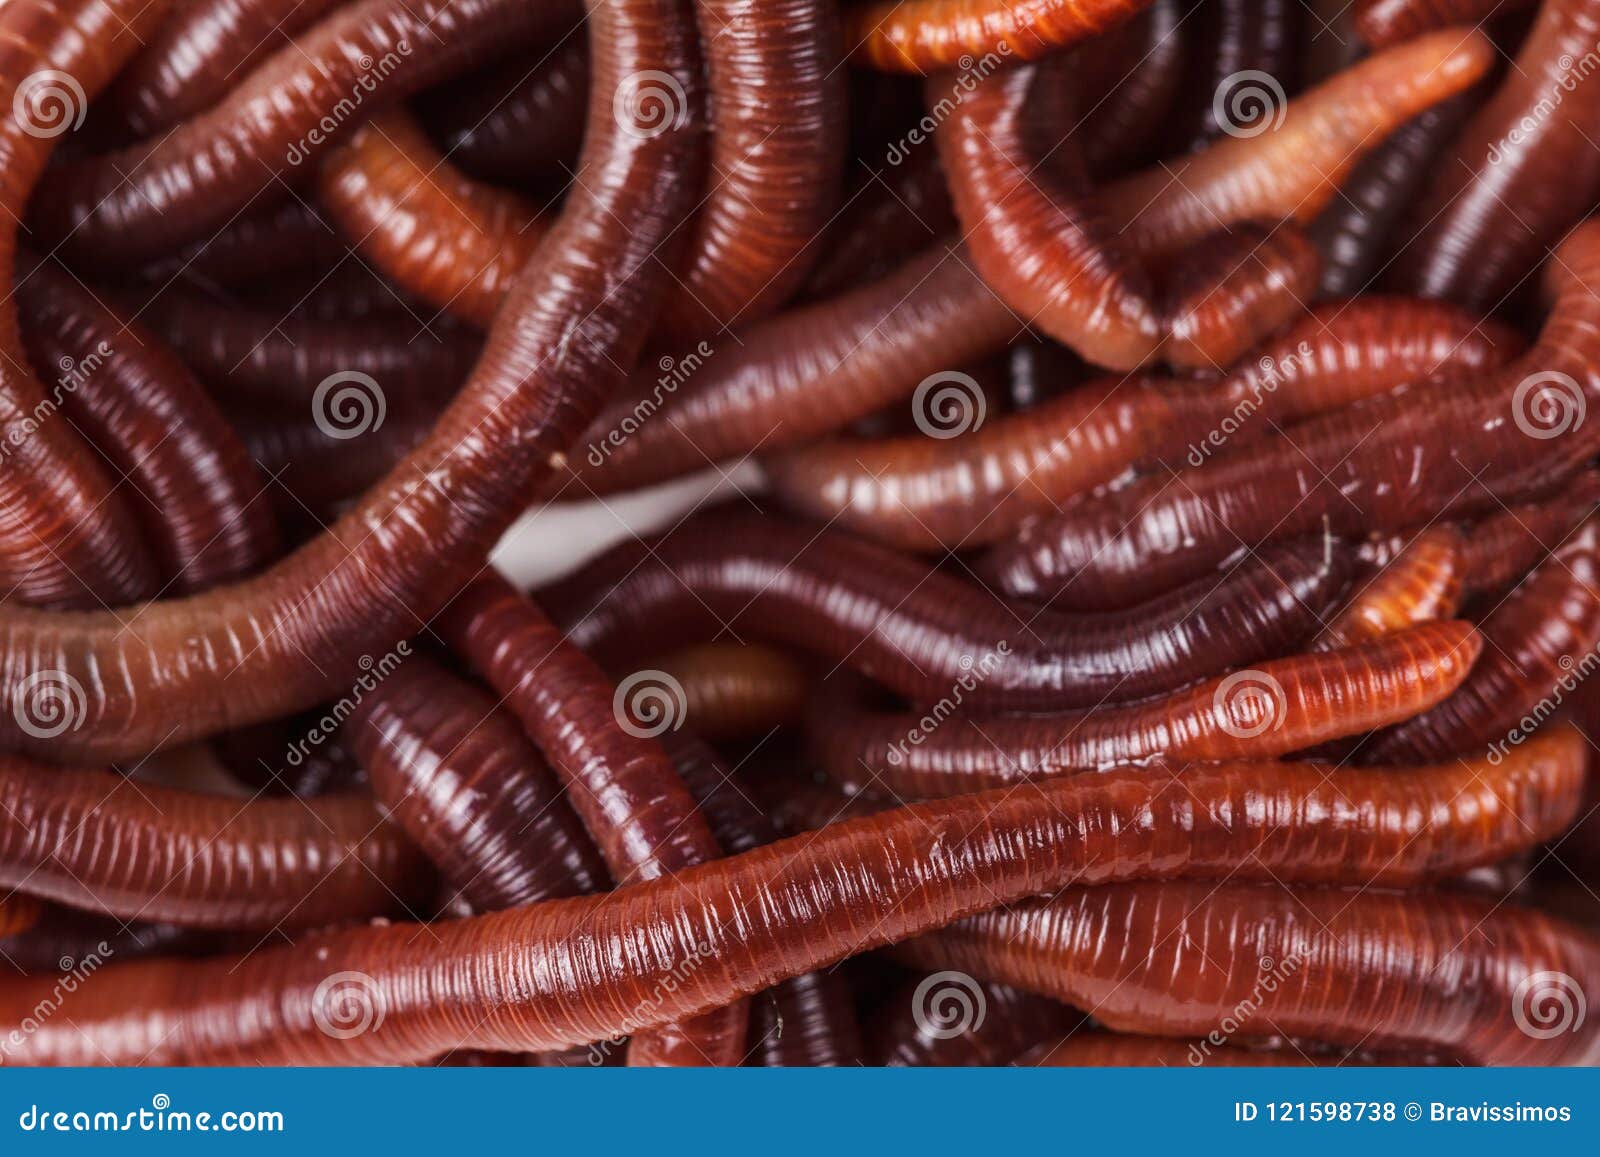 Animal earth worm stock photo. Image of background, garden - 121598738